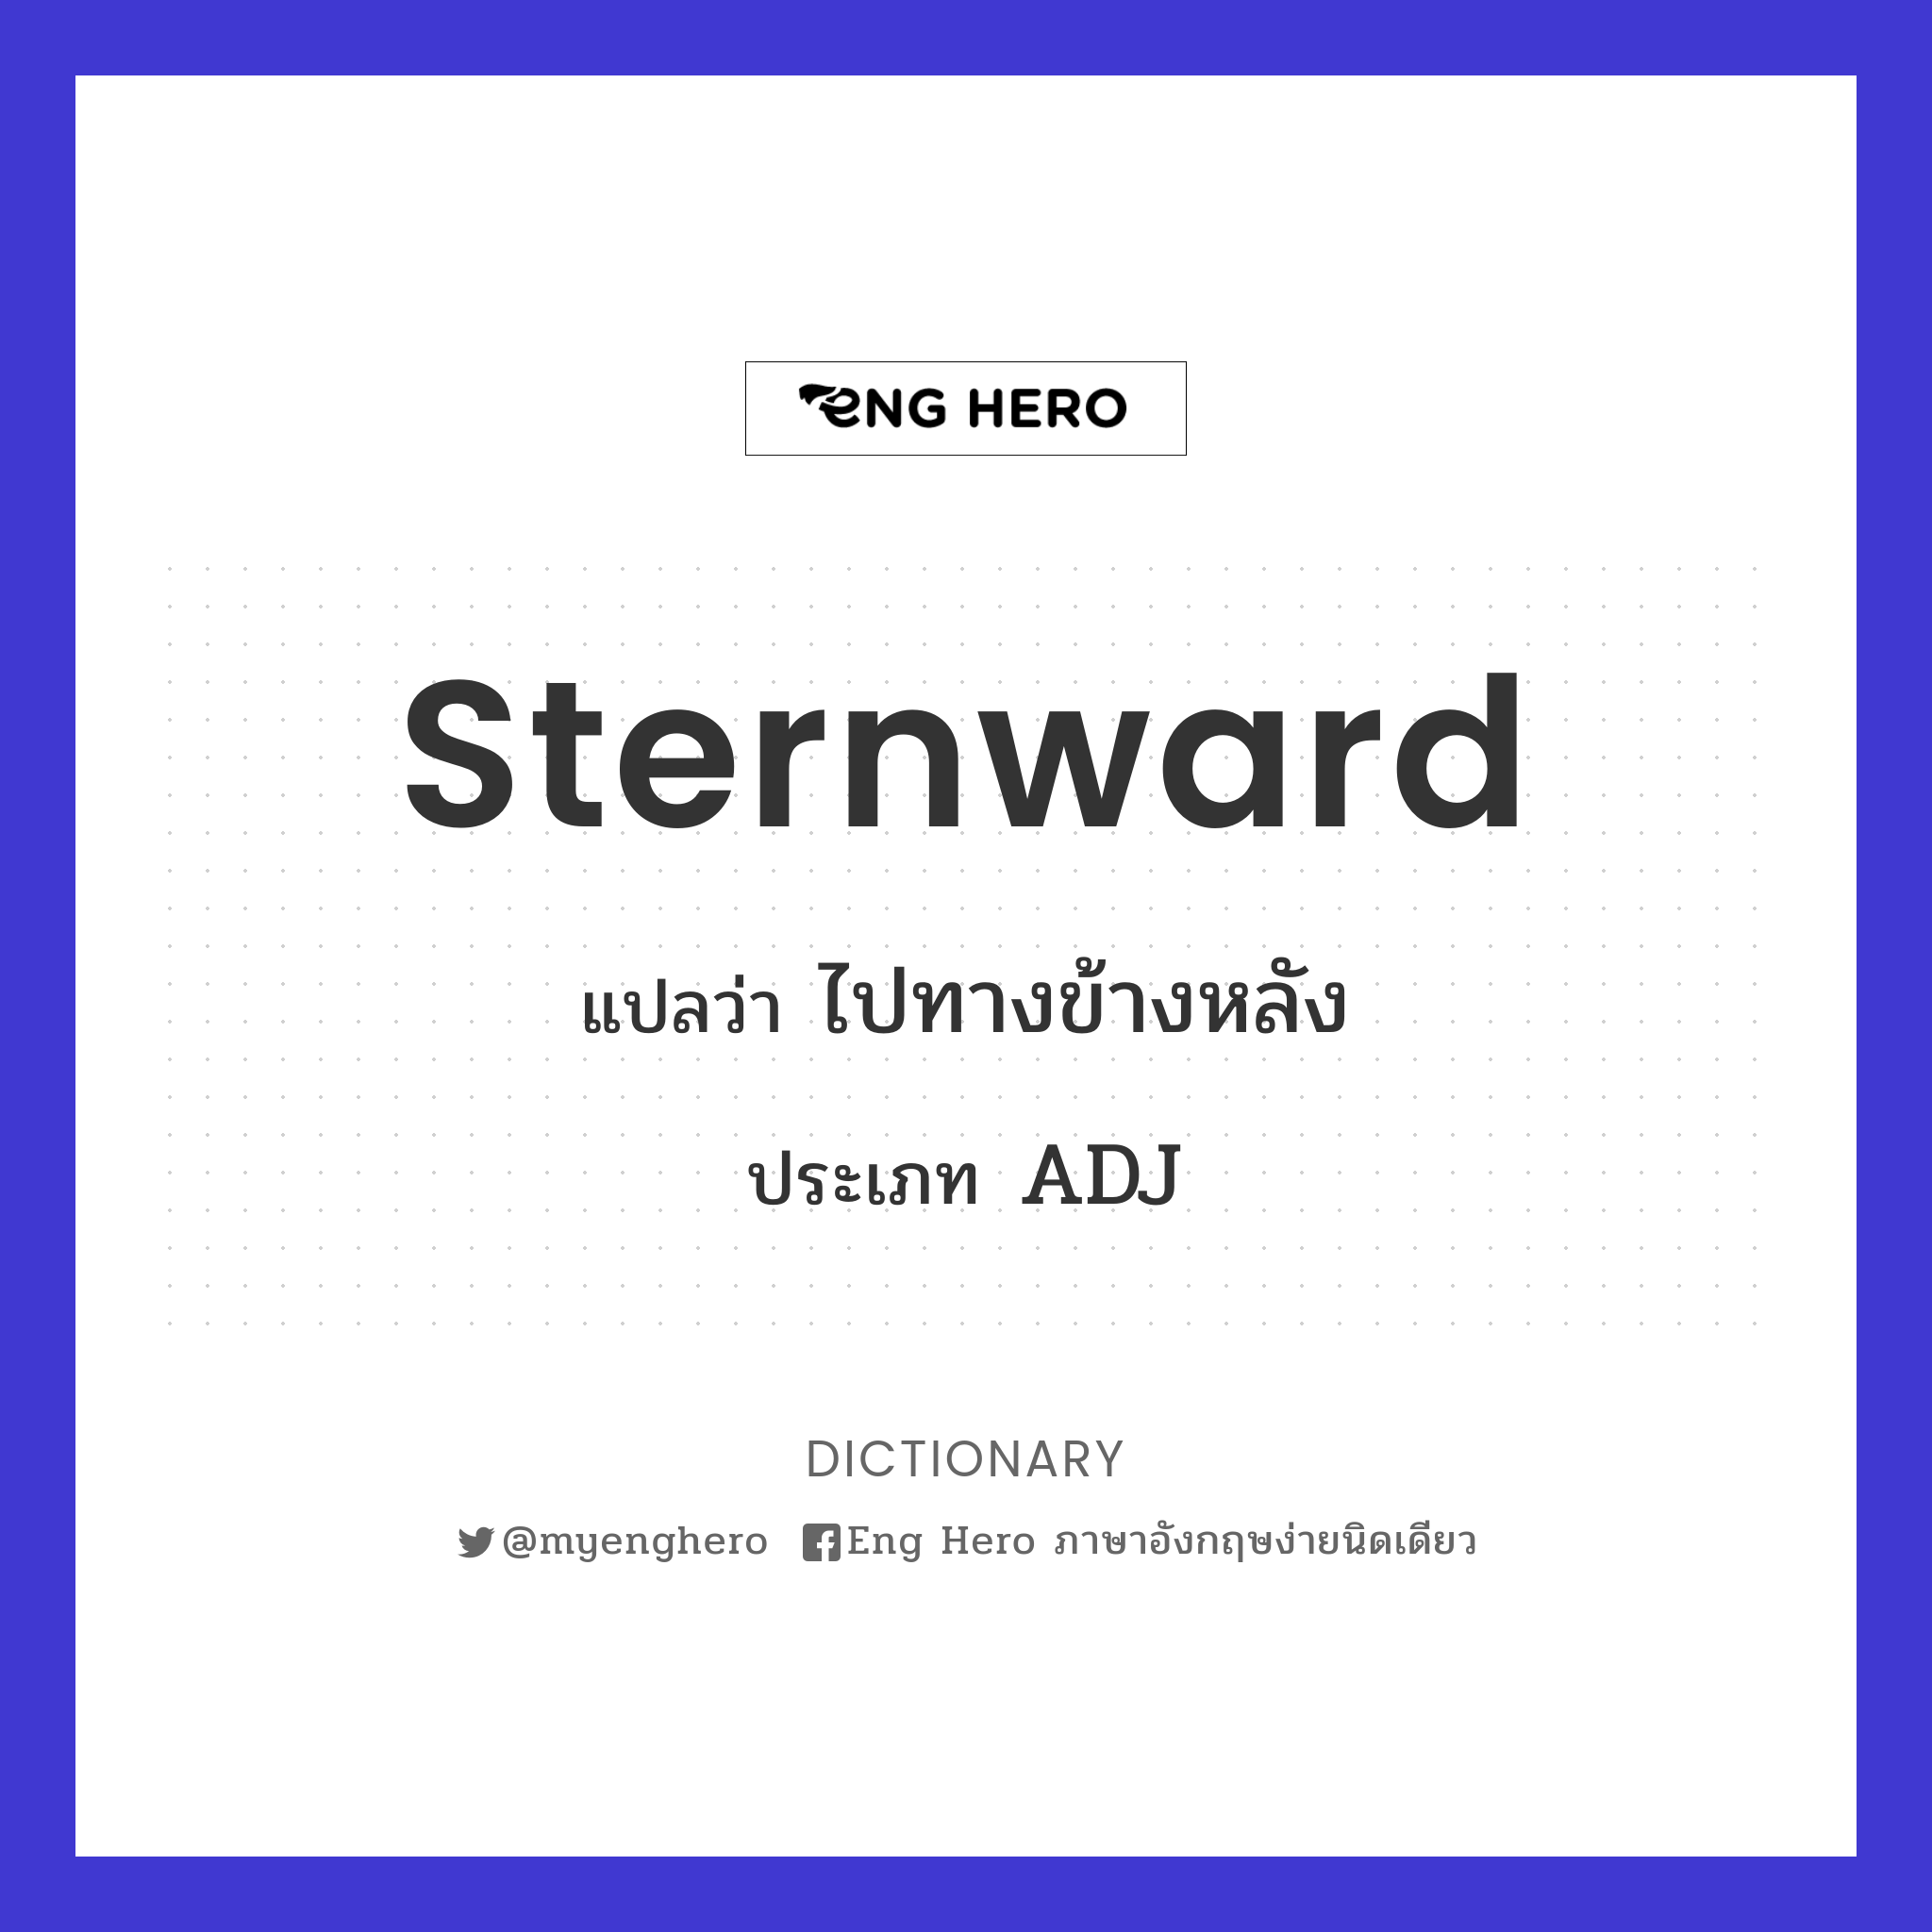 sternward